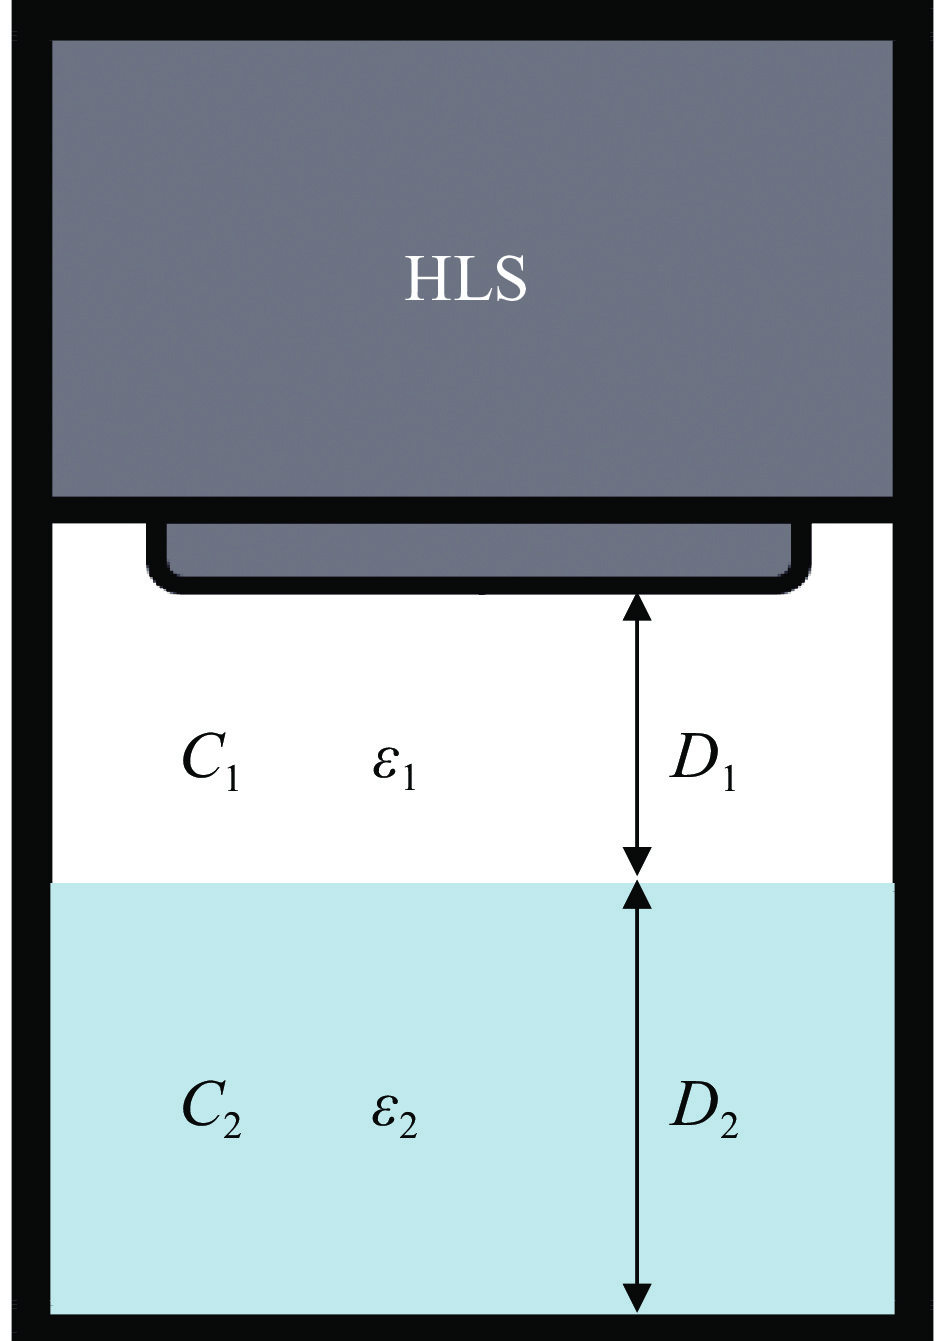 Measurement principle of capacitive HLS sensor